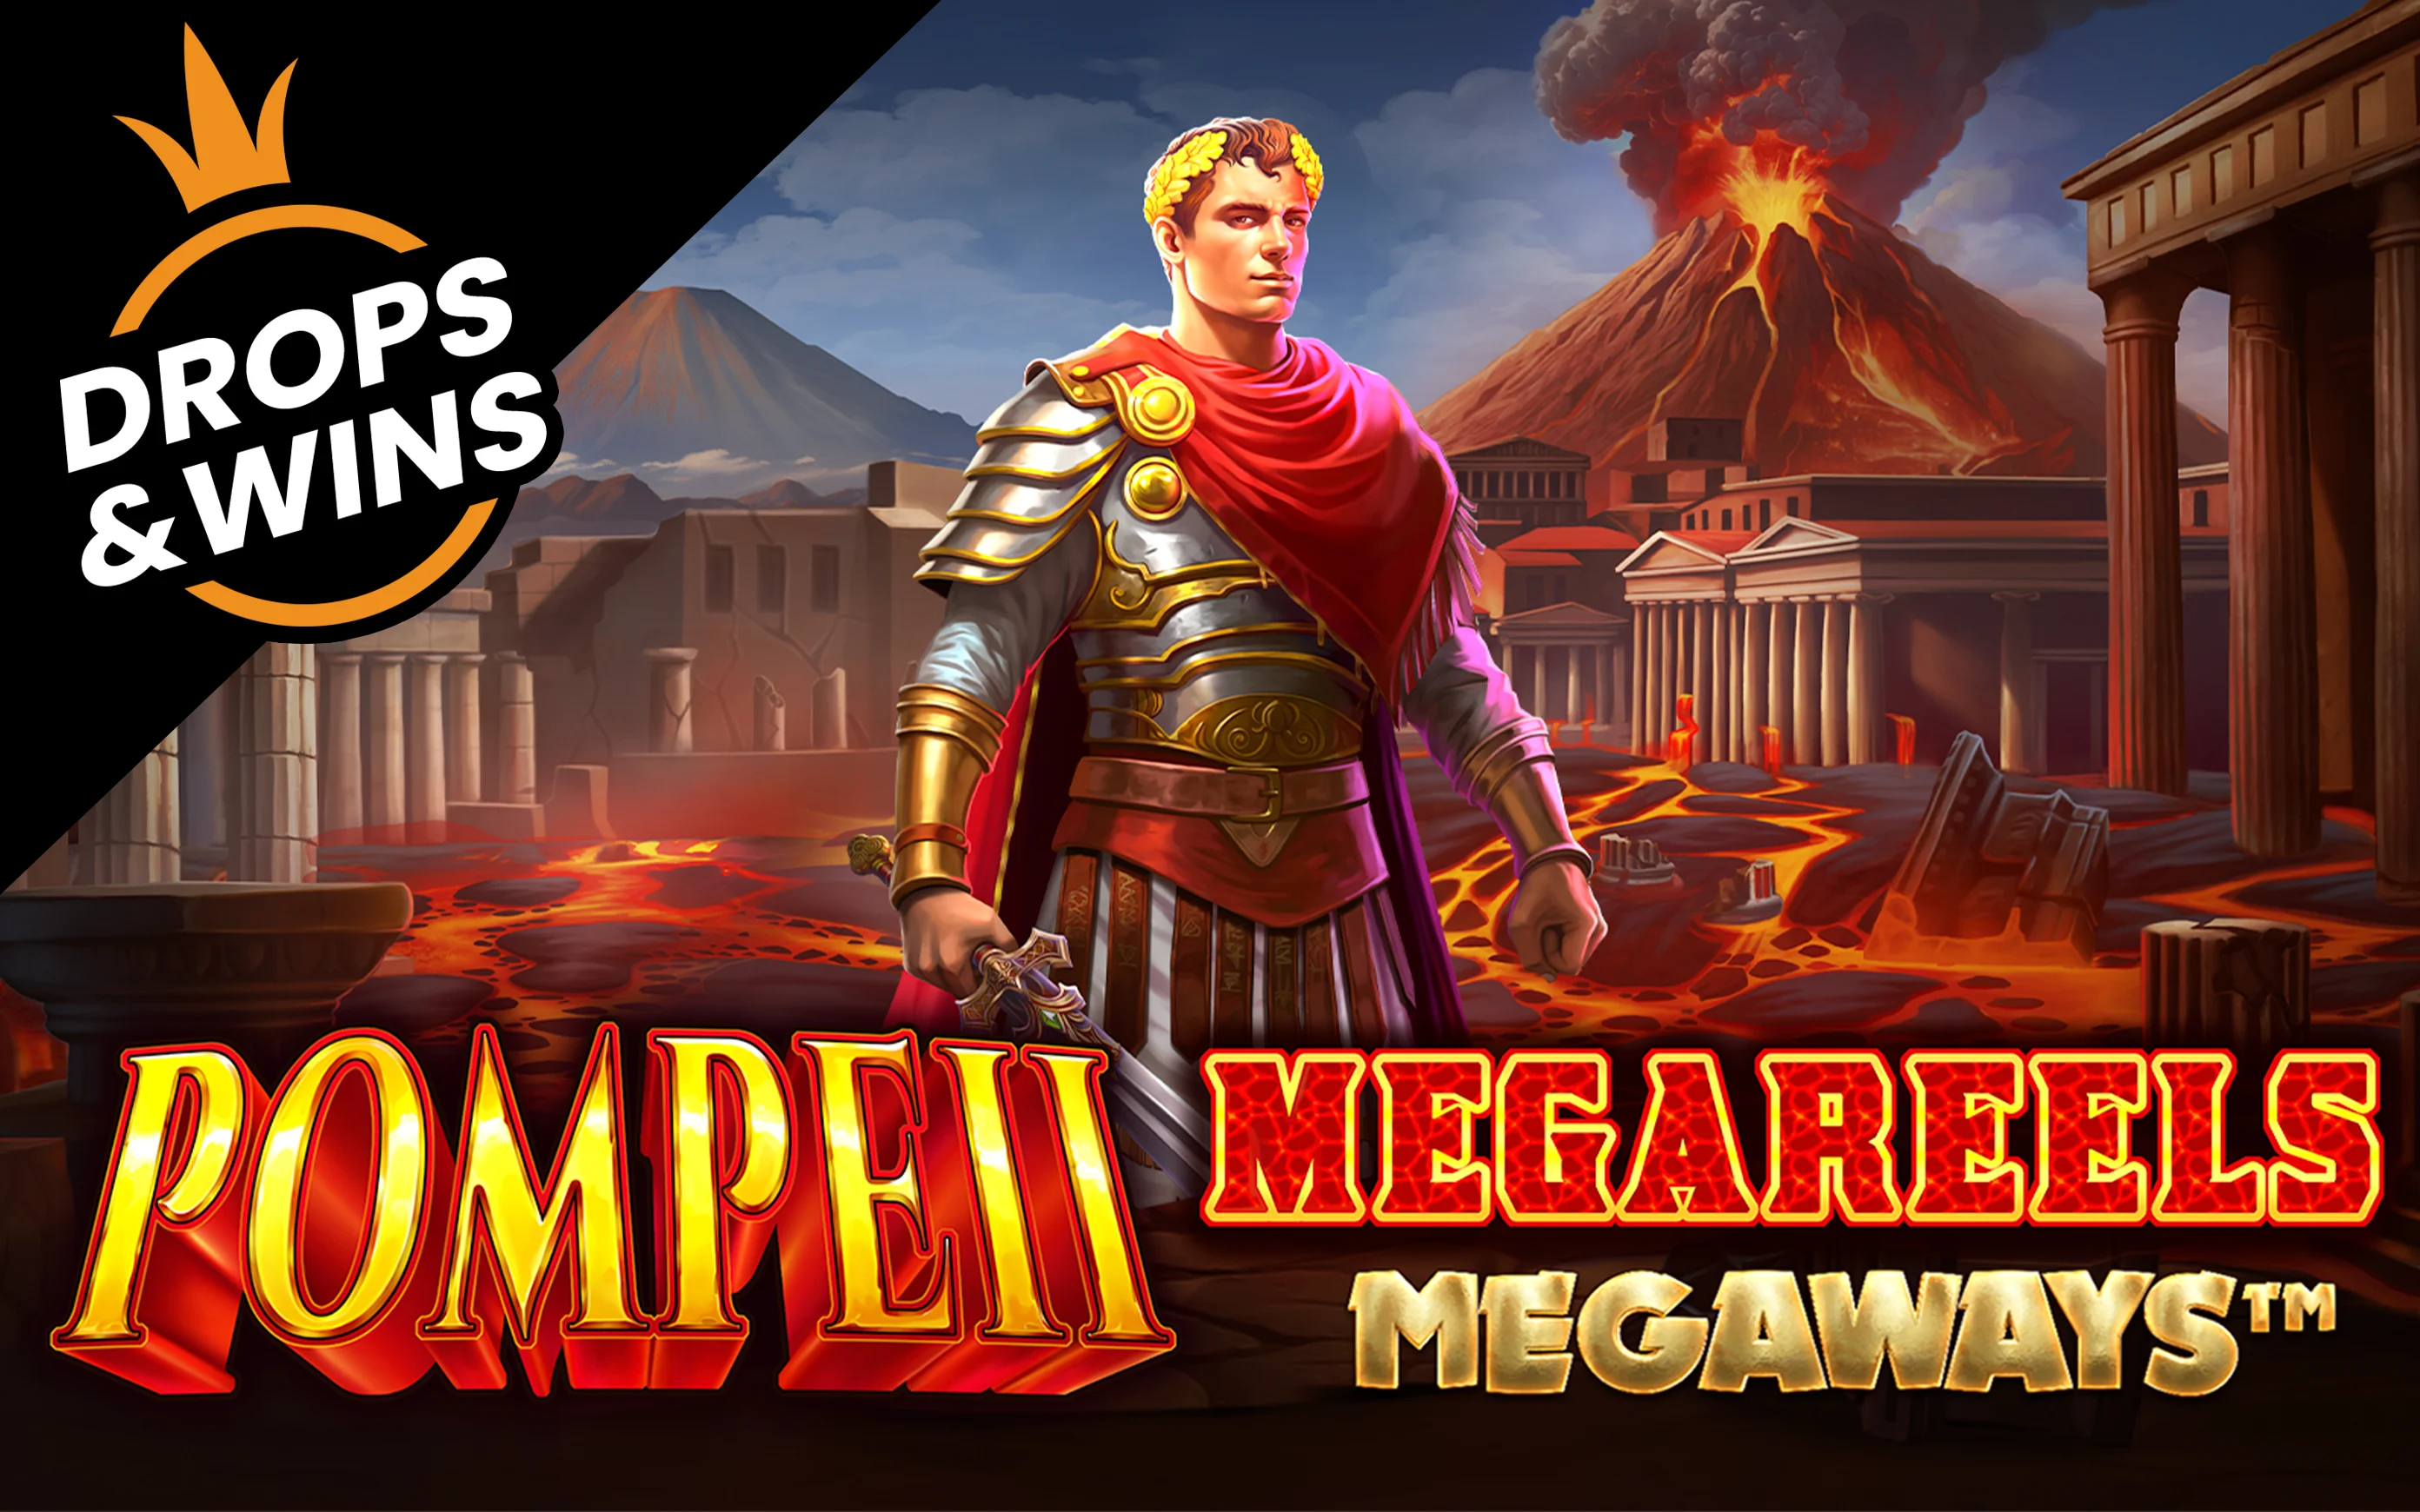 Грайте у Pompeii Megareels Megaways™ в онлайн-казино Starcasino.be